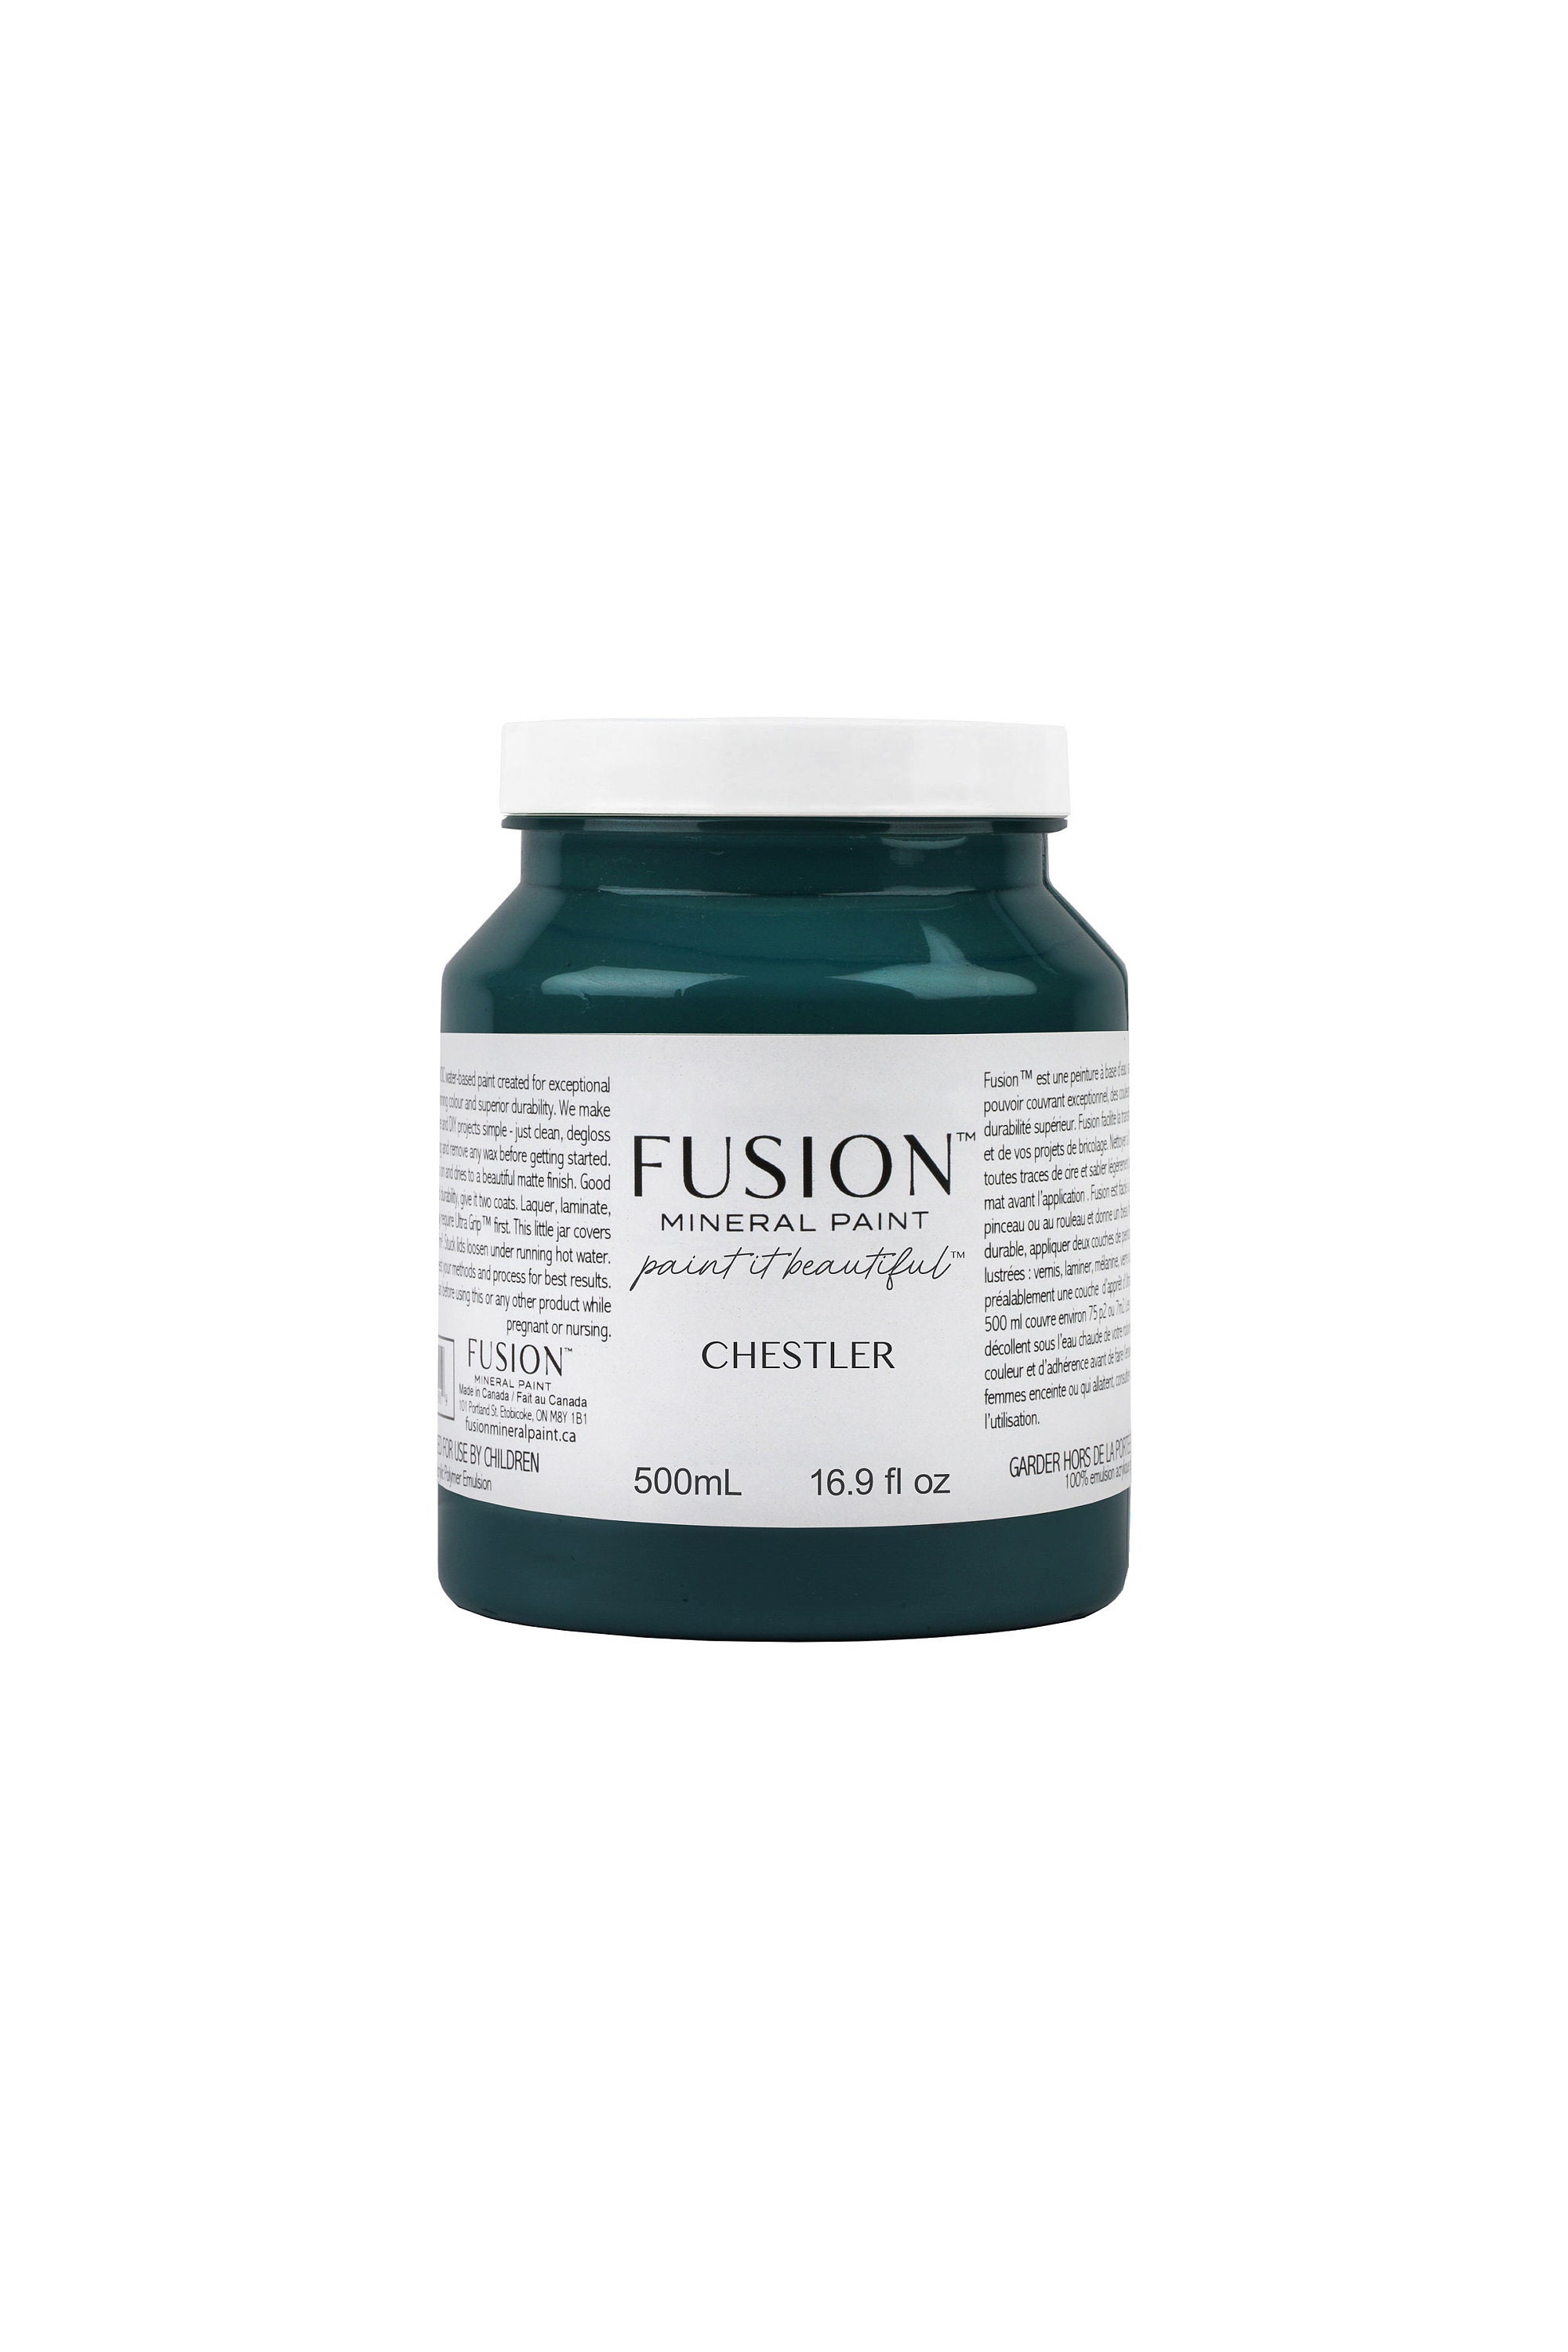 Chestler - Fusion Mineral Paint - I Restore Stuff